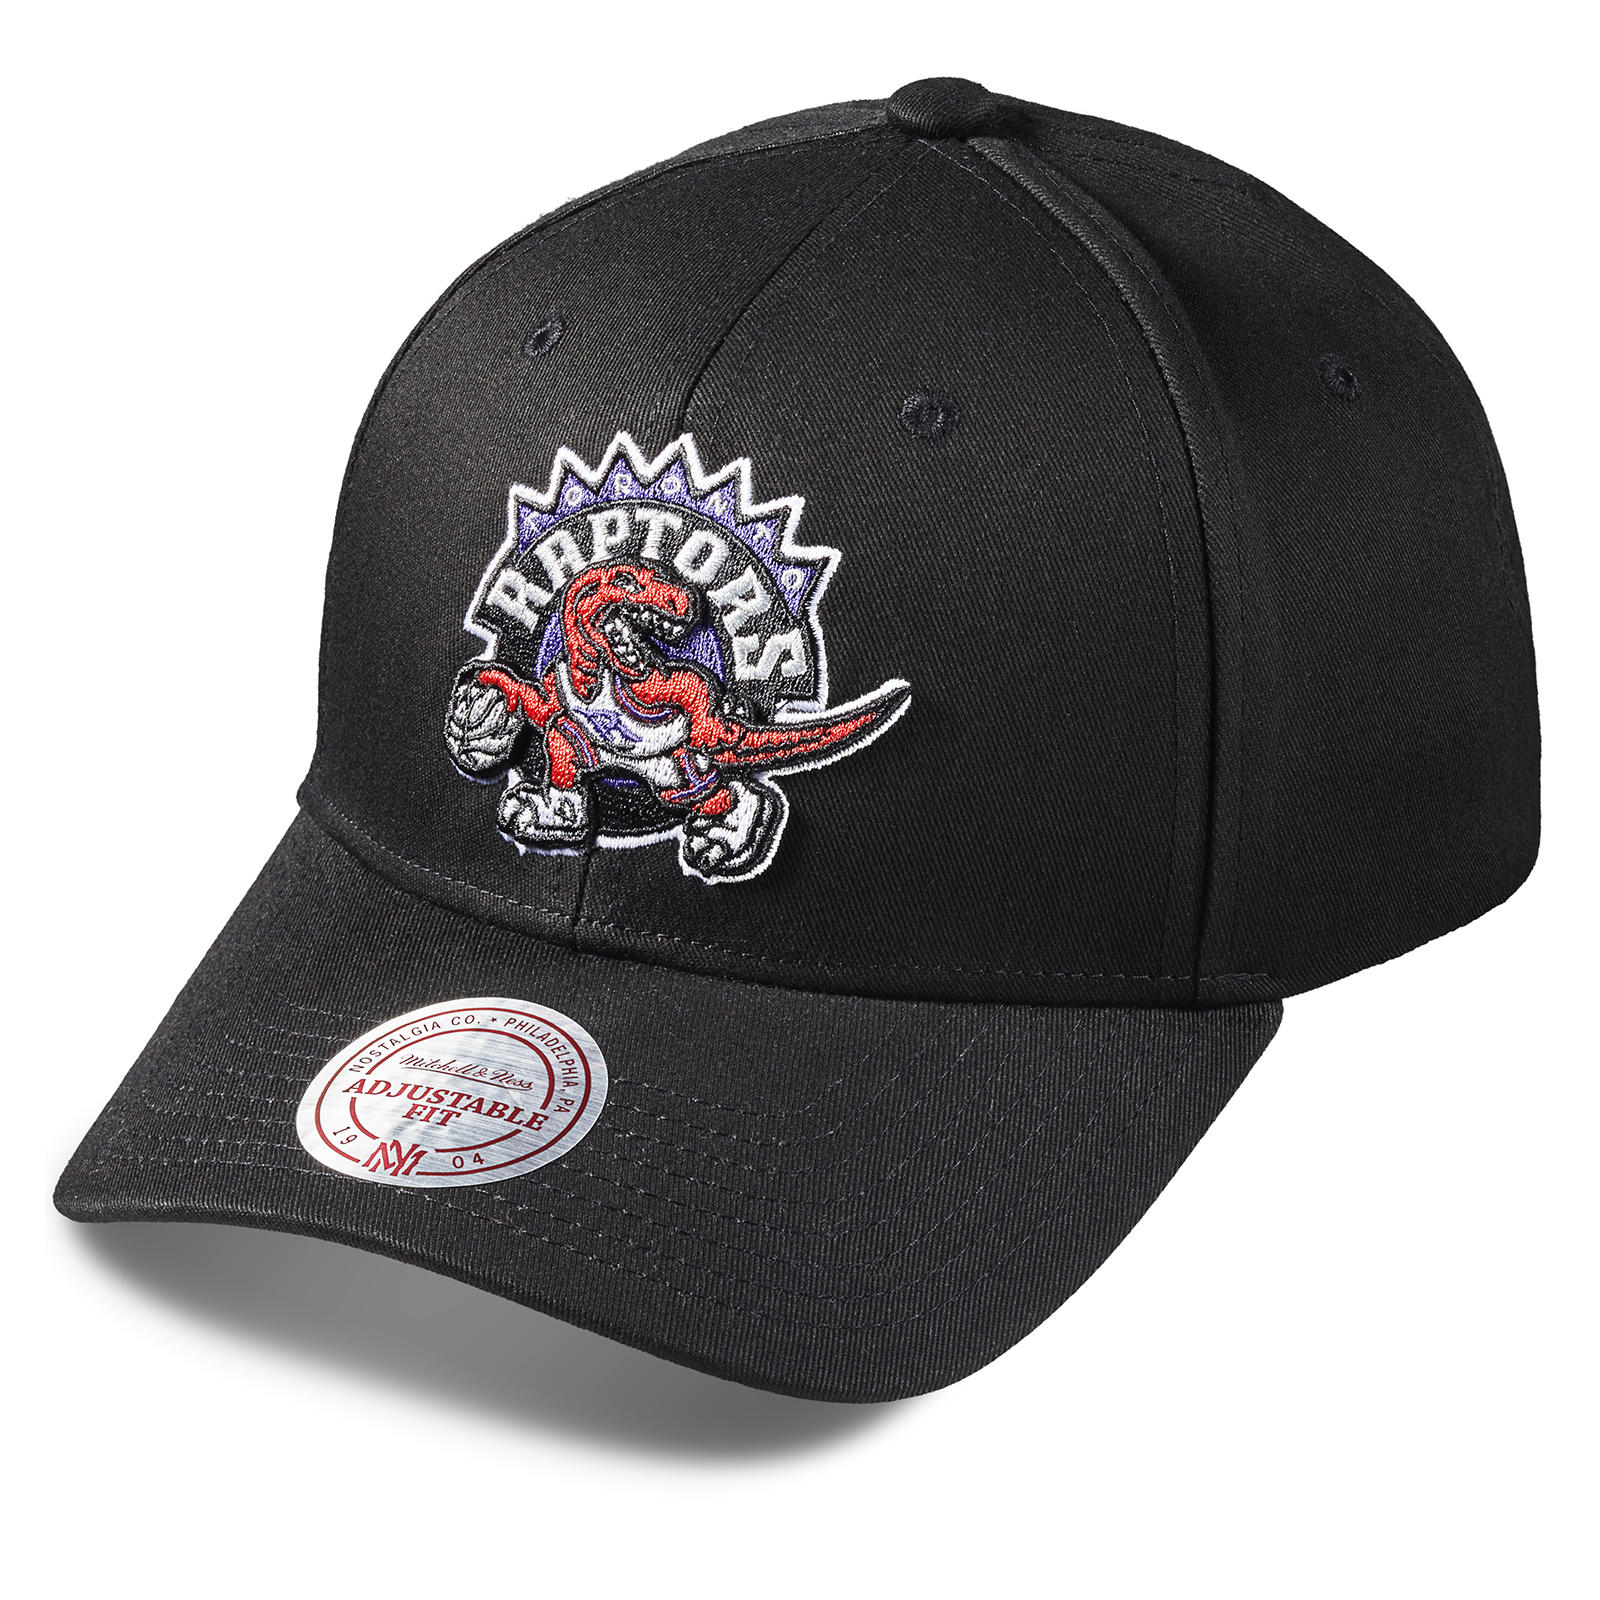 Mitchell & Ness Nostalgia Co. | Team Logo Low Pro Snapback - Toronto Raptors1600 x 1600